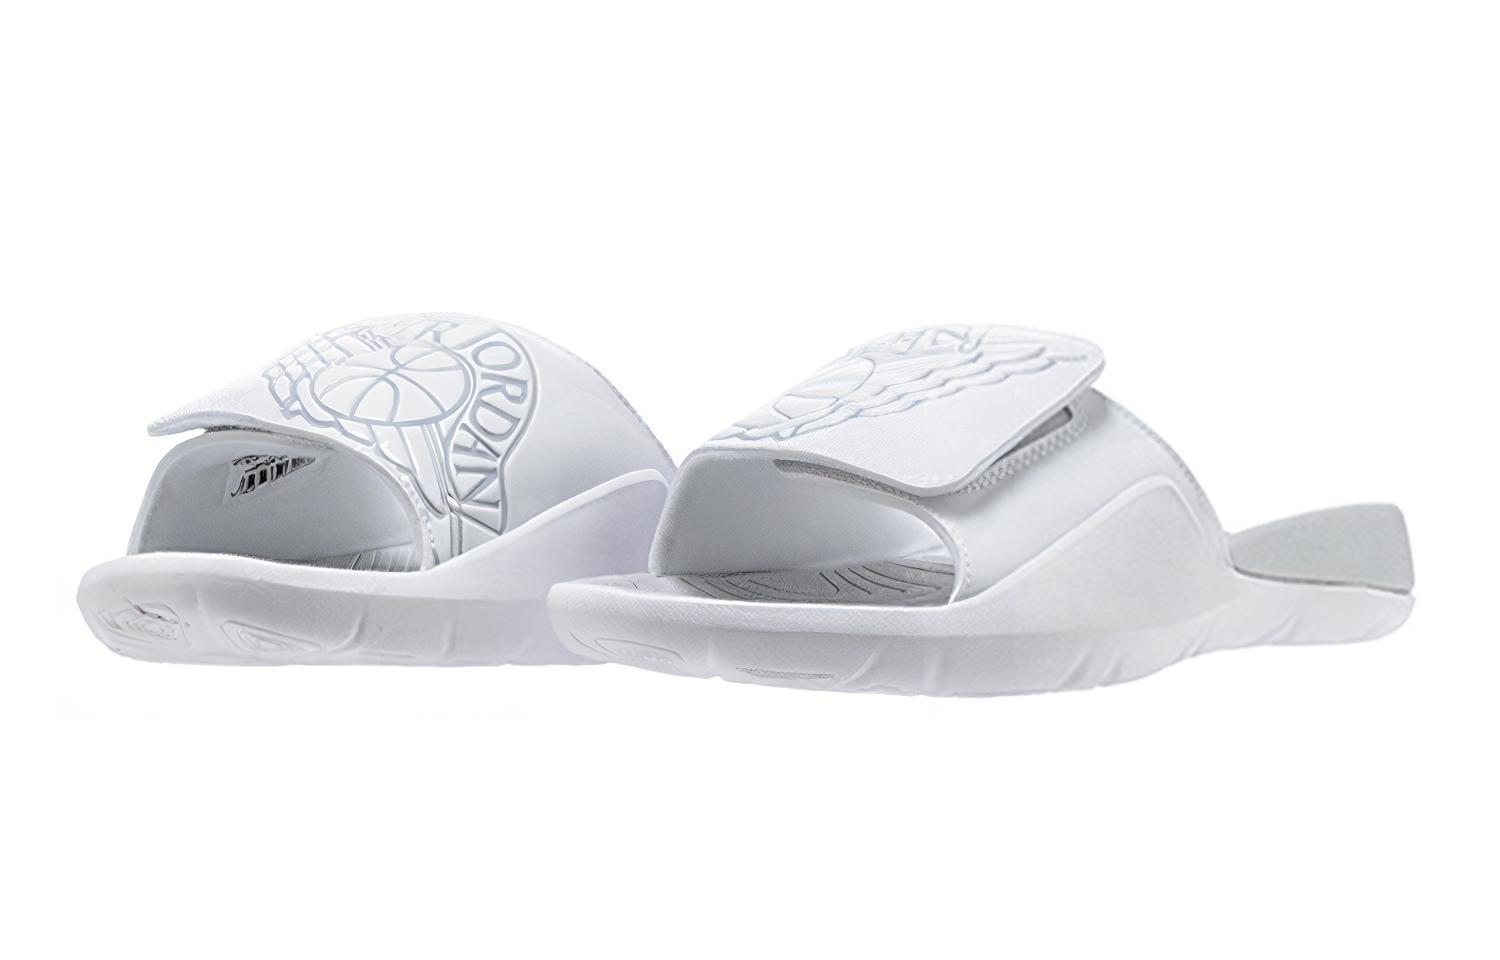 Jordan Hydro 7 Sandals Slippers White(W)